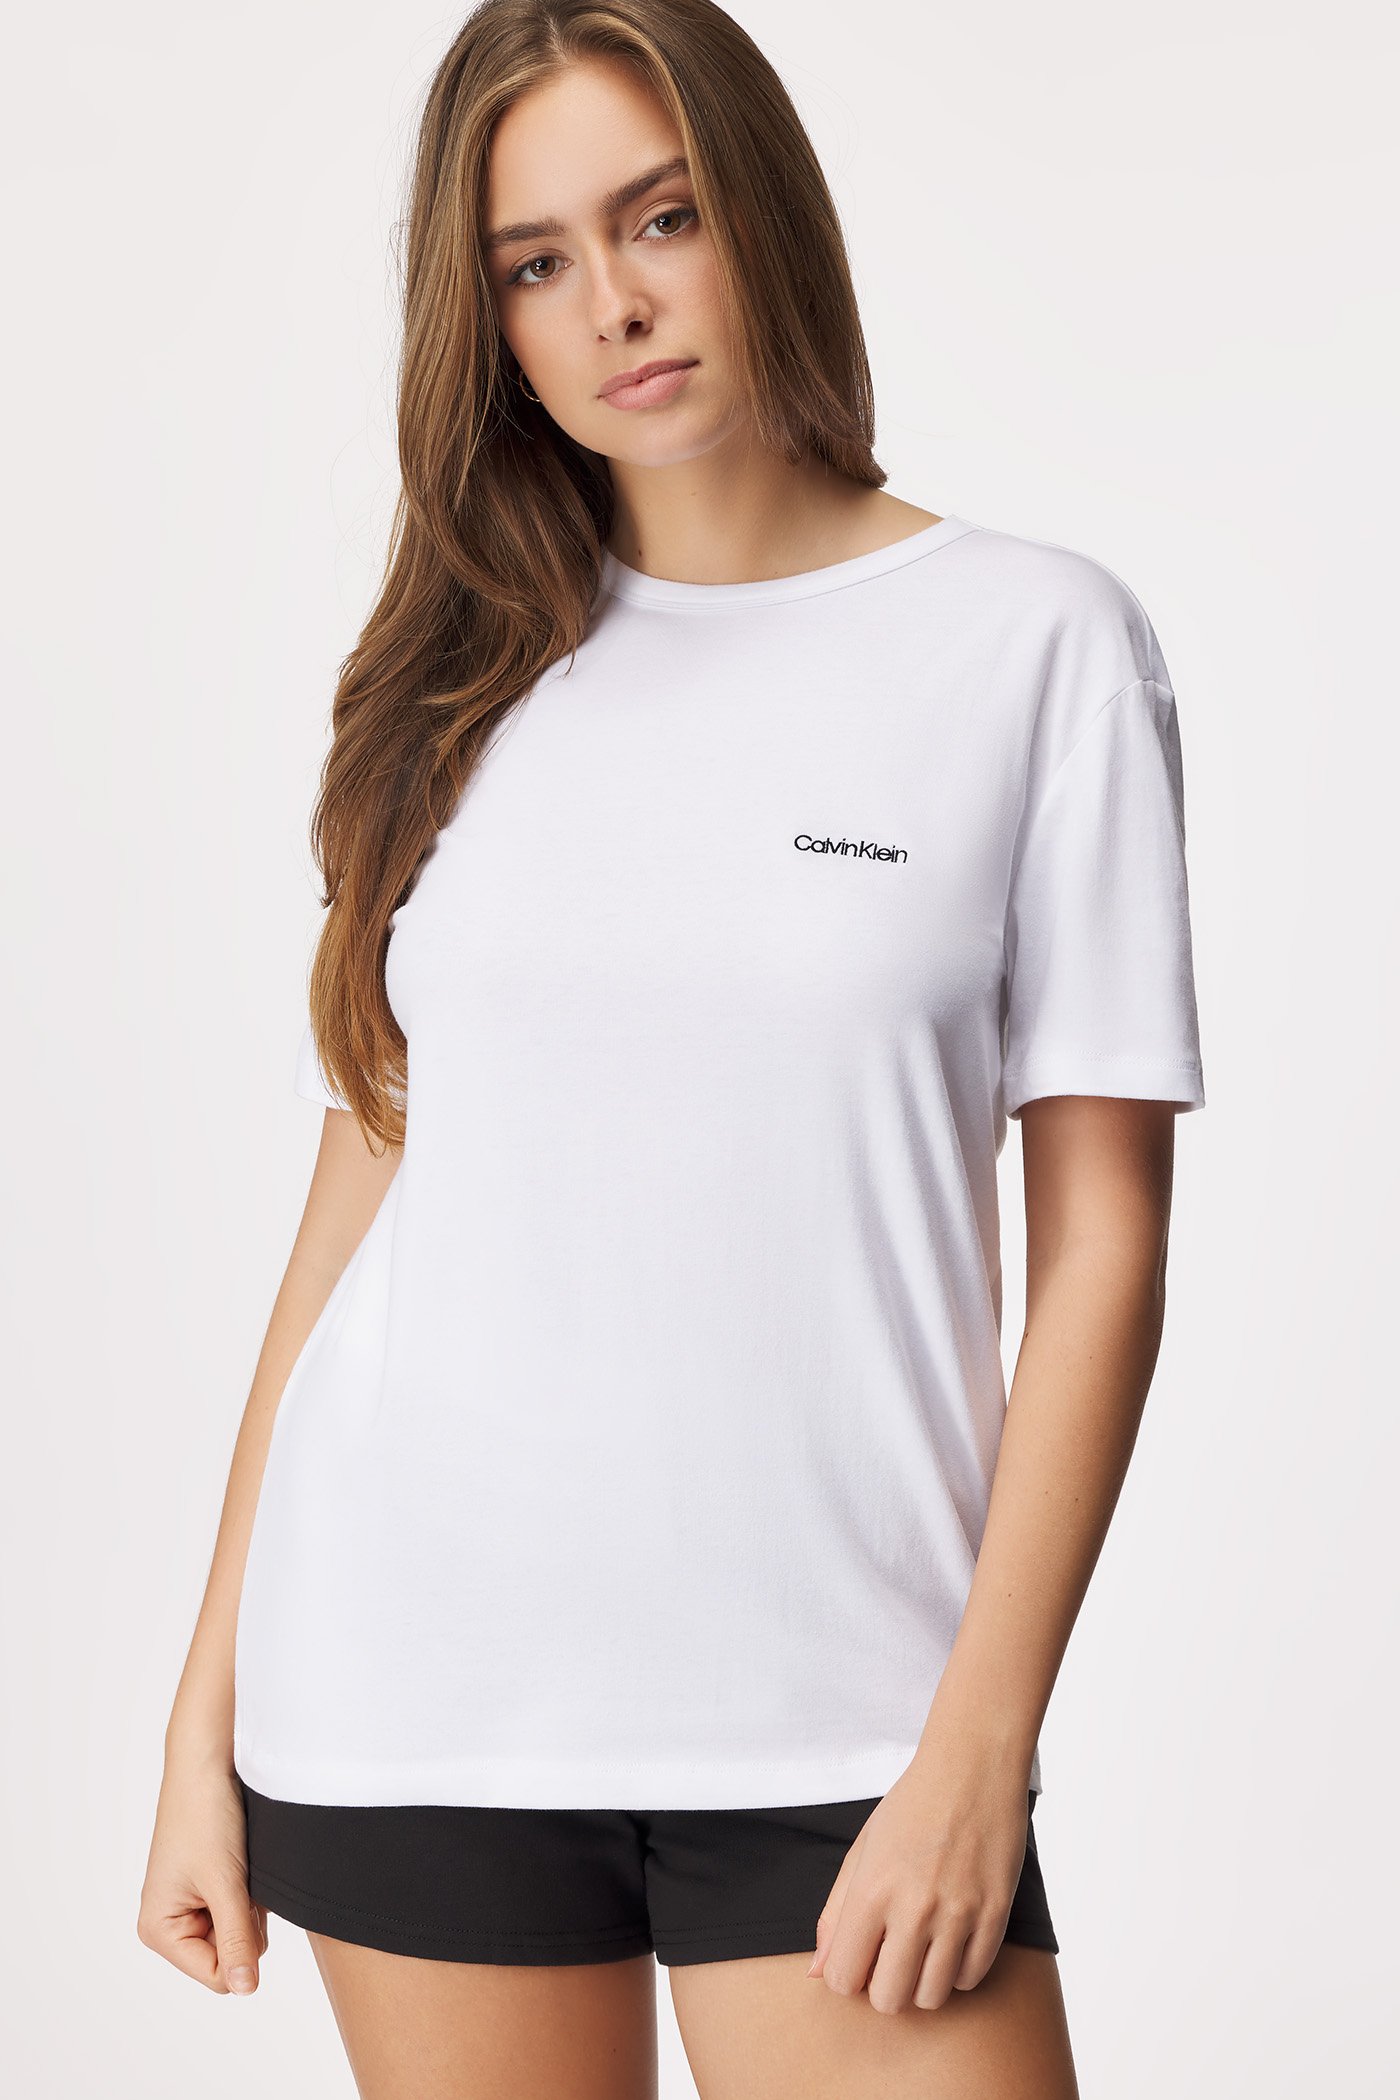 Dámske tričko Calvin Klein | Astratex.sk